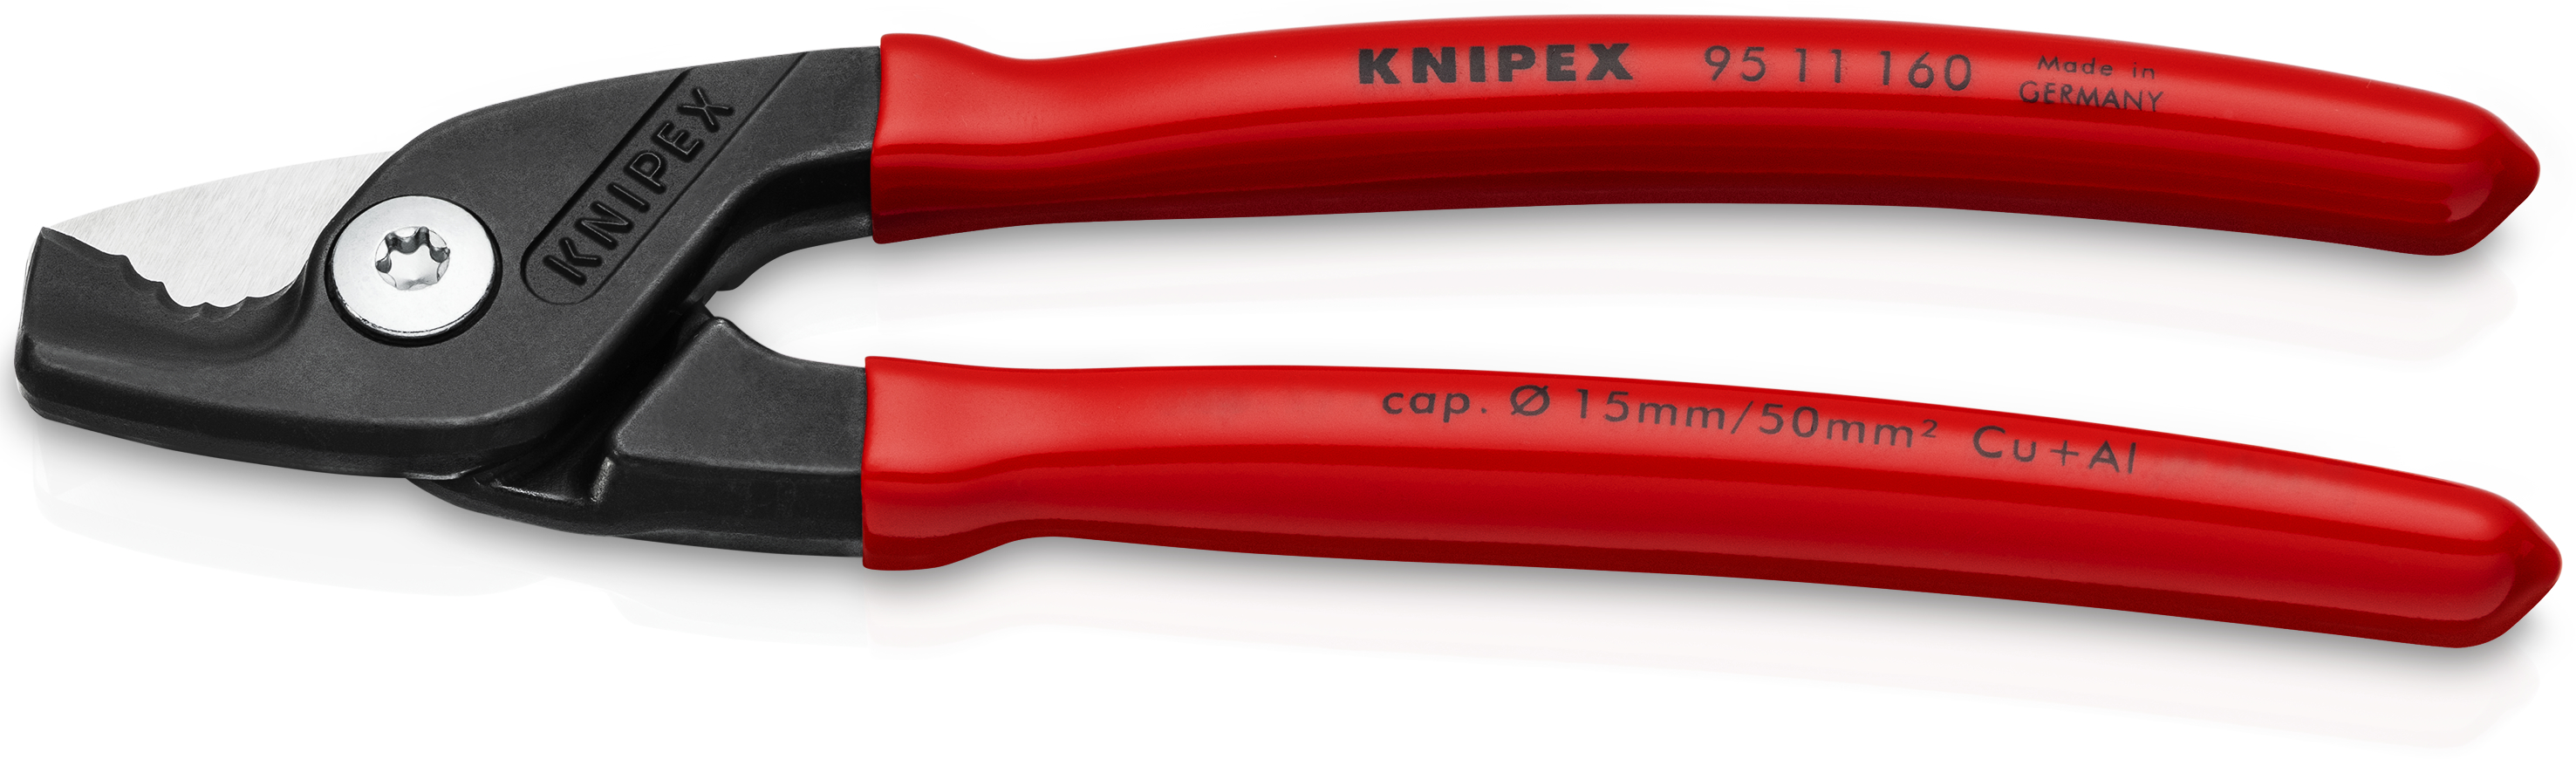 Knipex 9511160 StepCut Cleste de tăiat cabluri Ø 15 mm / 50 mm², manere acoperite cu plastic, lungime 160 mm